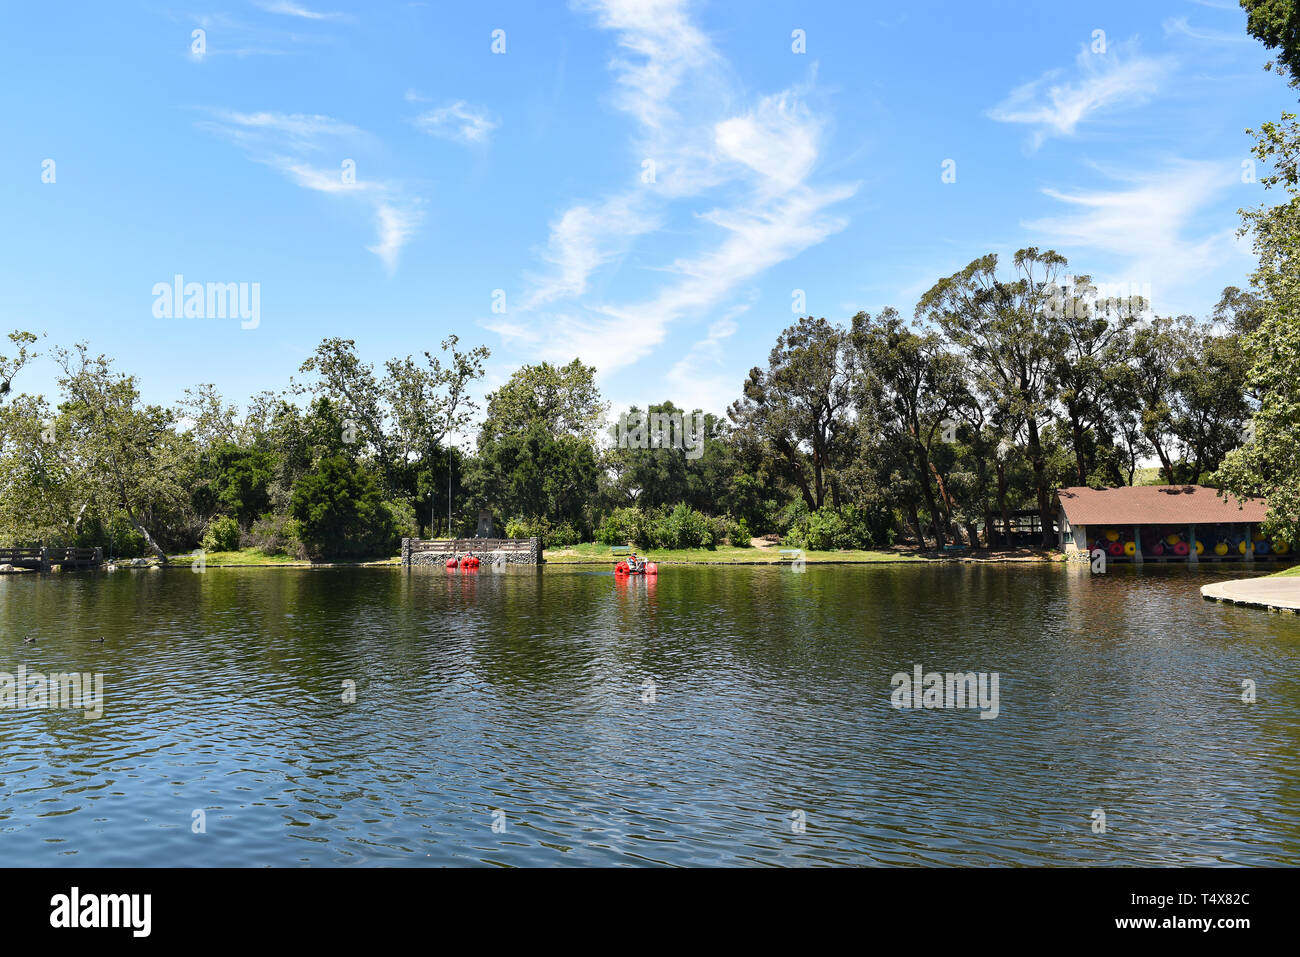 ORANGE, Kalifornien - 18. APRIL 2019: See in Irvine Park in Orange, Kalifornien, einem 160 Hektar großen Park wurde die countys, die erste regionale Park im Jahre 1897. Stockfoto